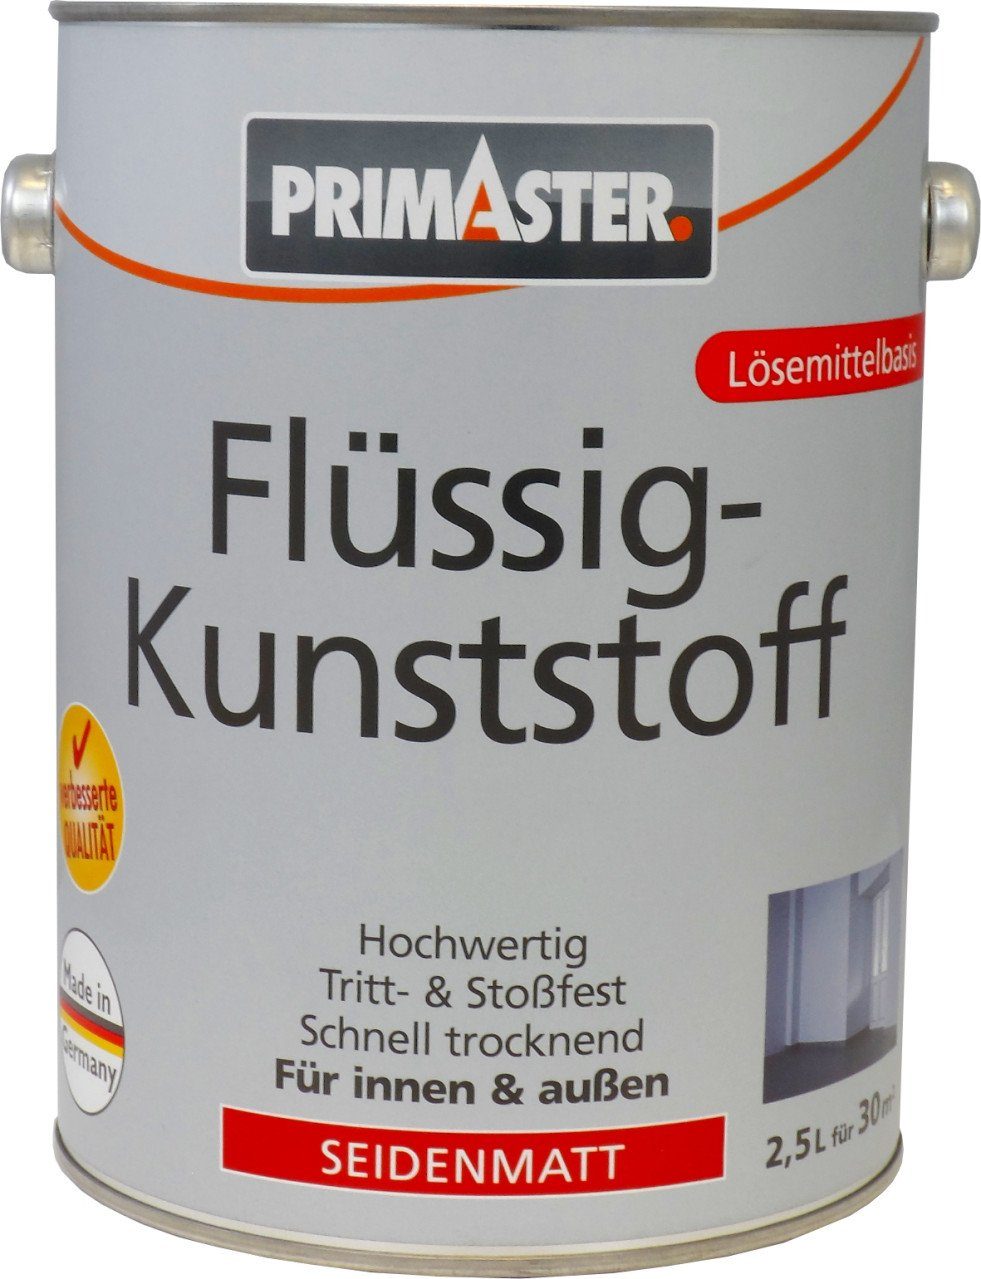 RAL Primaster 8012 Premium Primaster Flüssigkunststoff 2,5 L Acryl-Flüssigkunststoff